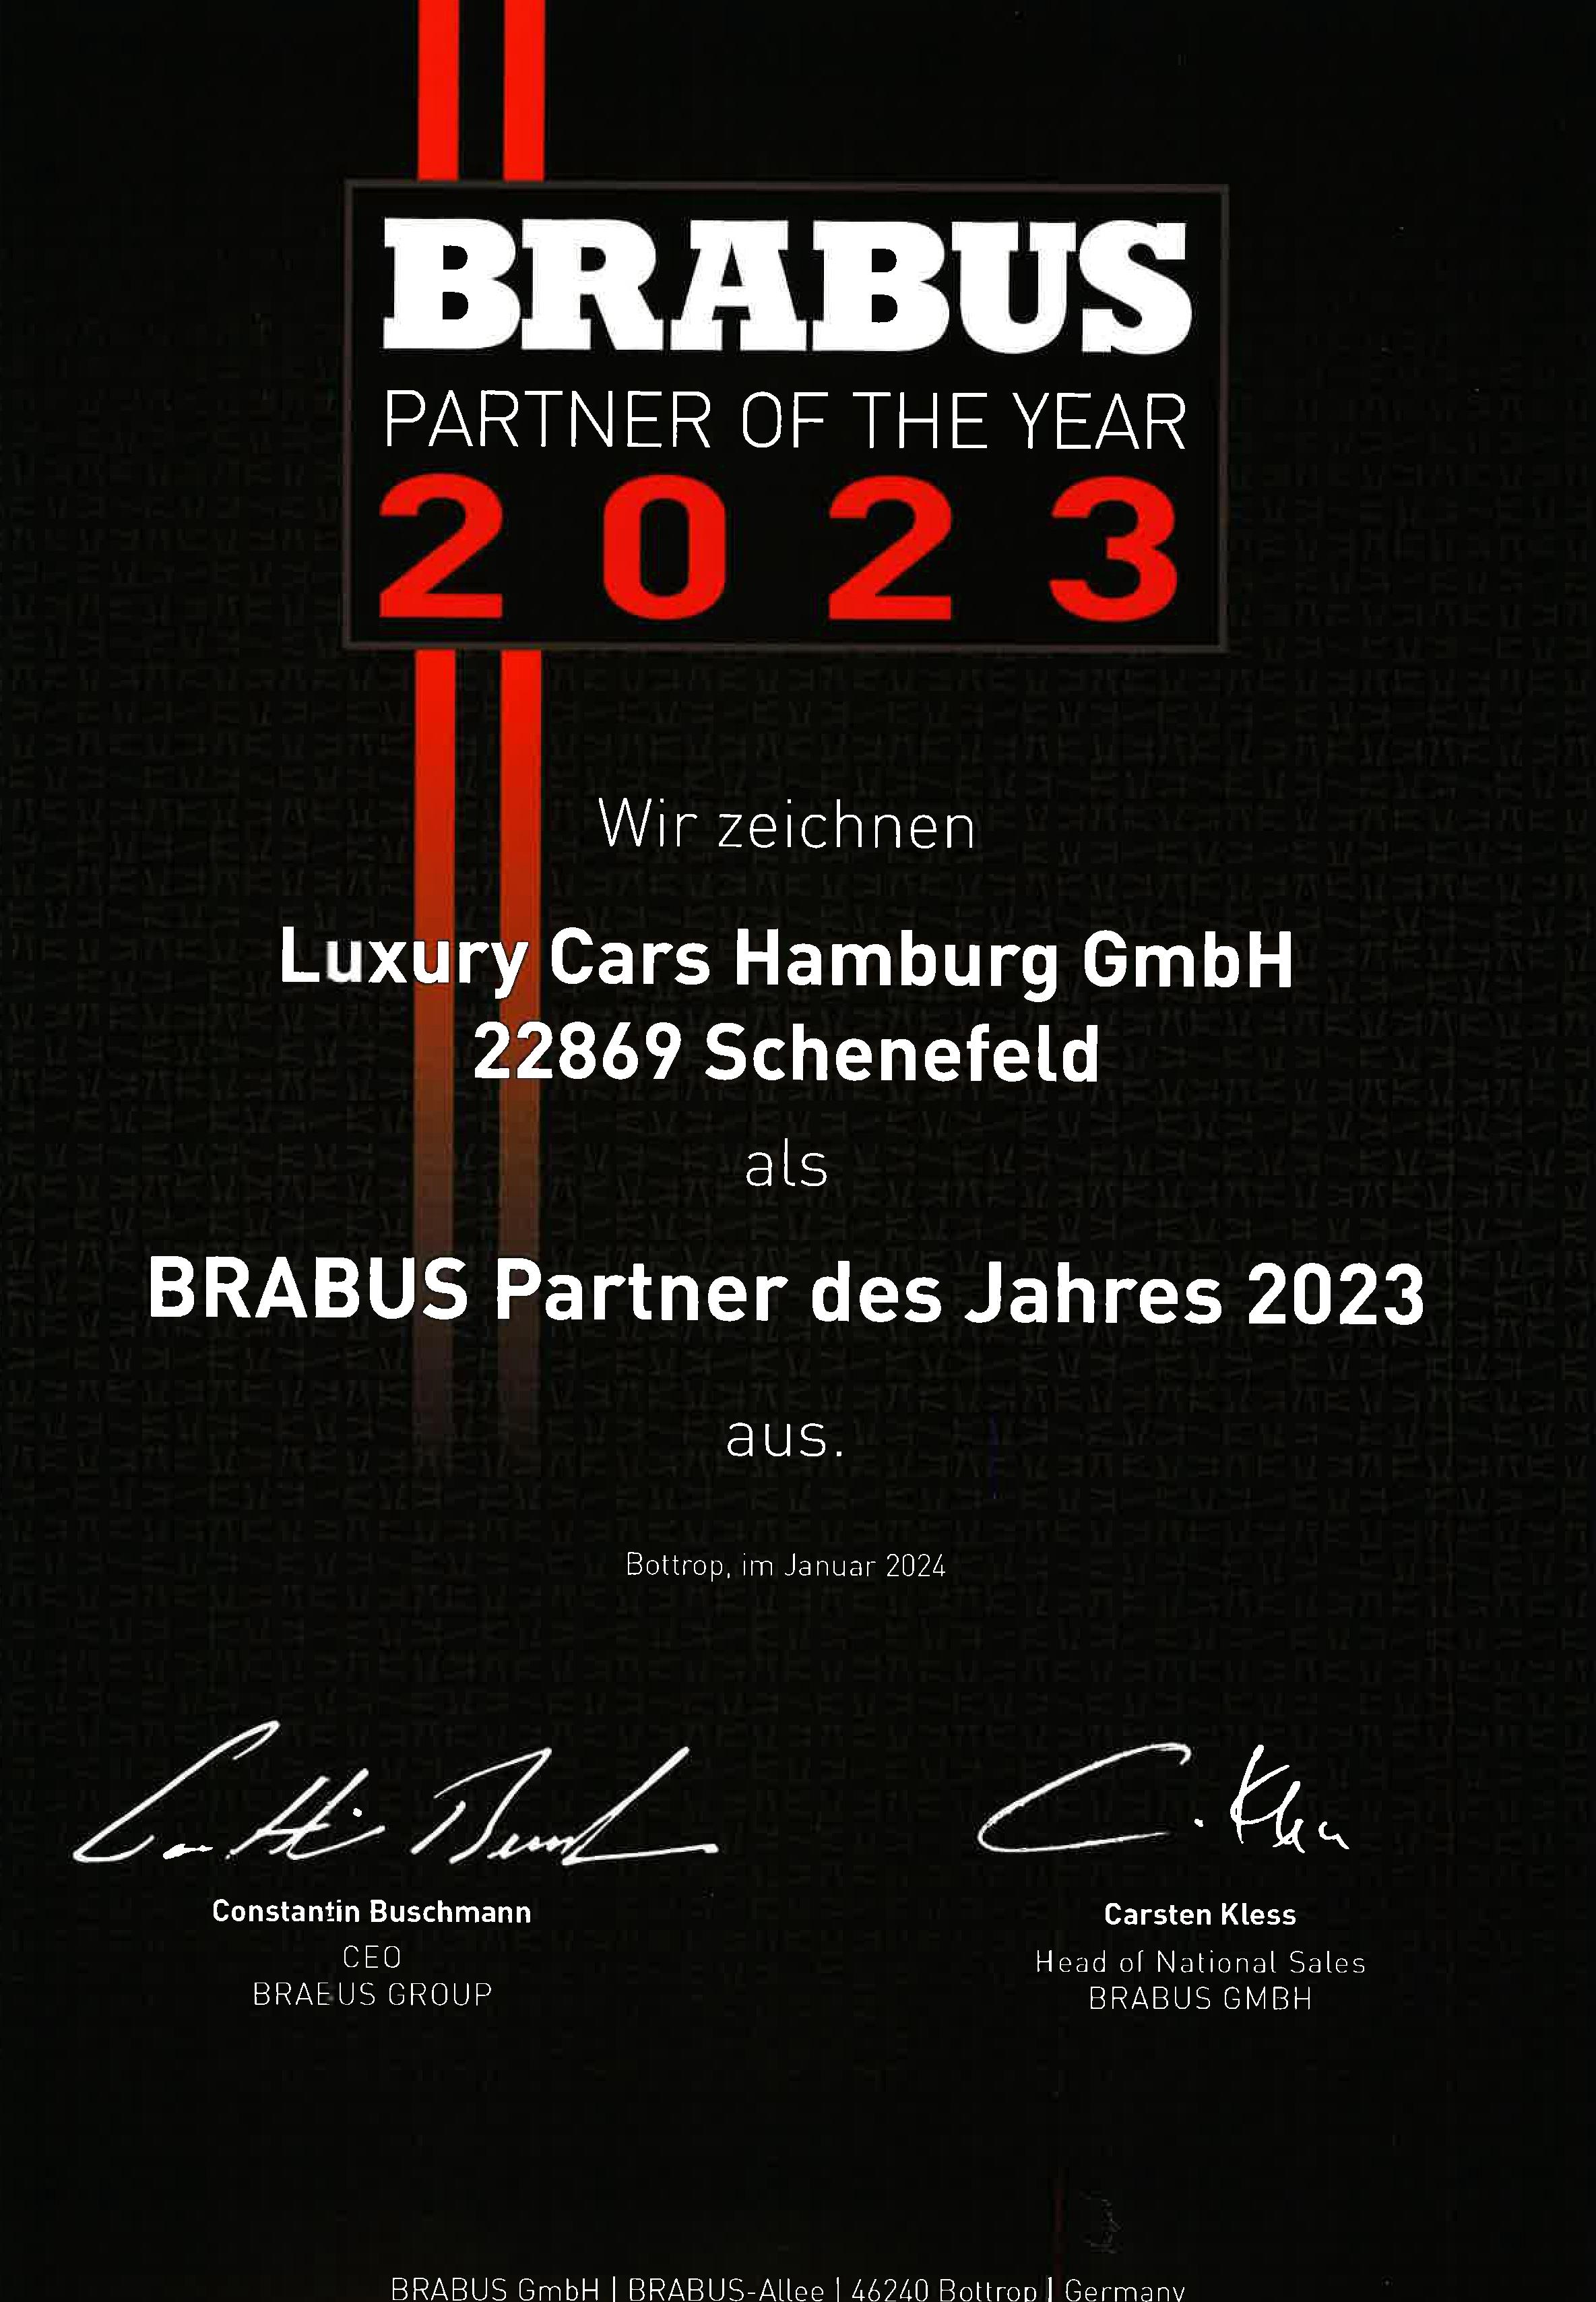 BRABUS partner of the year 2023